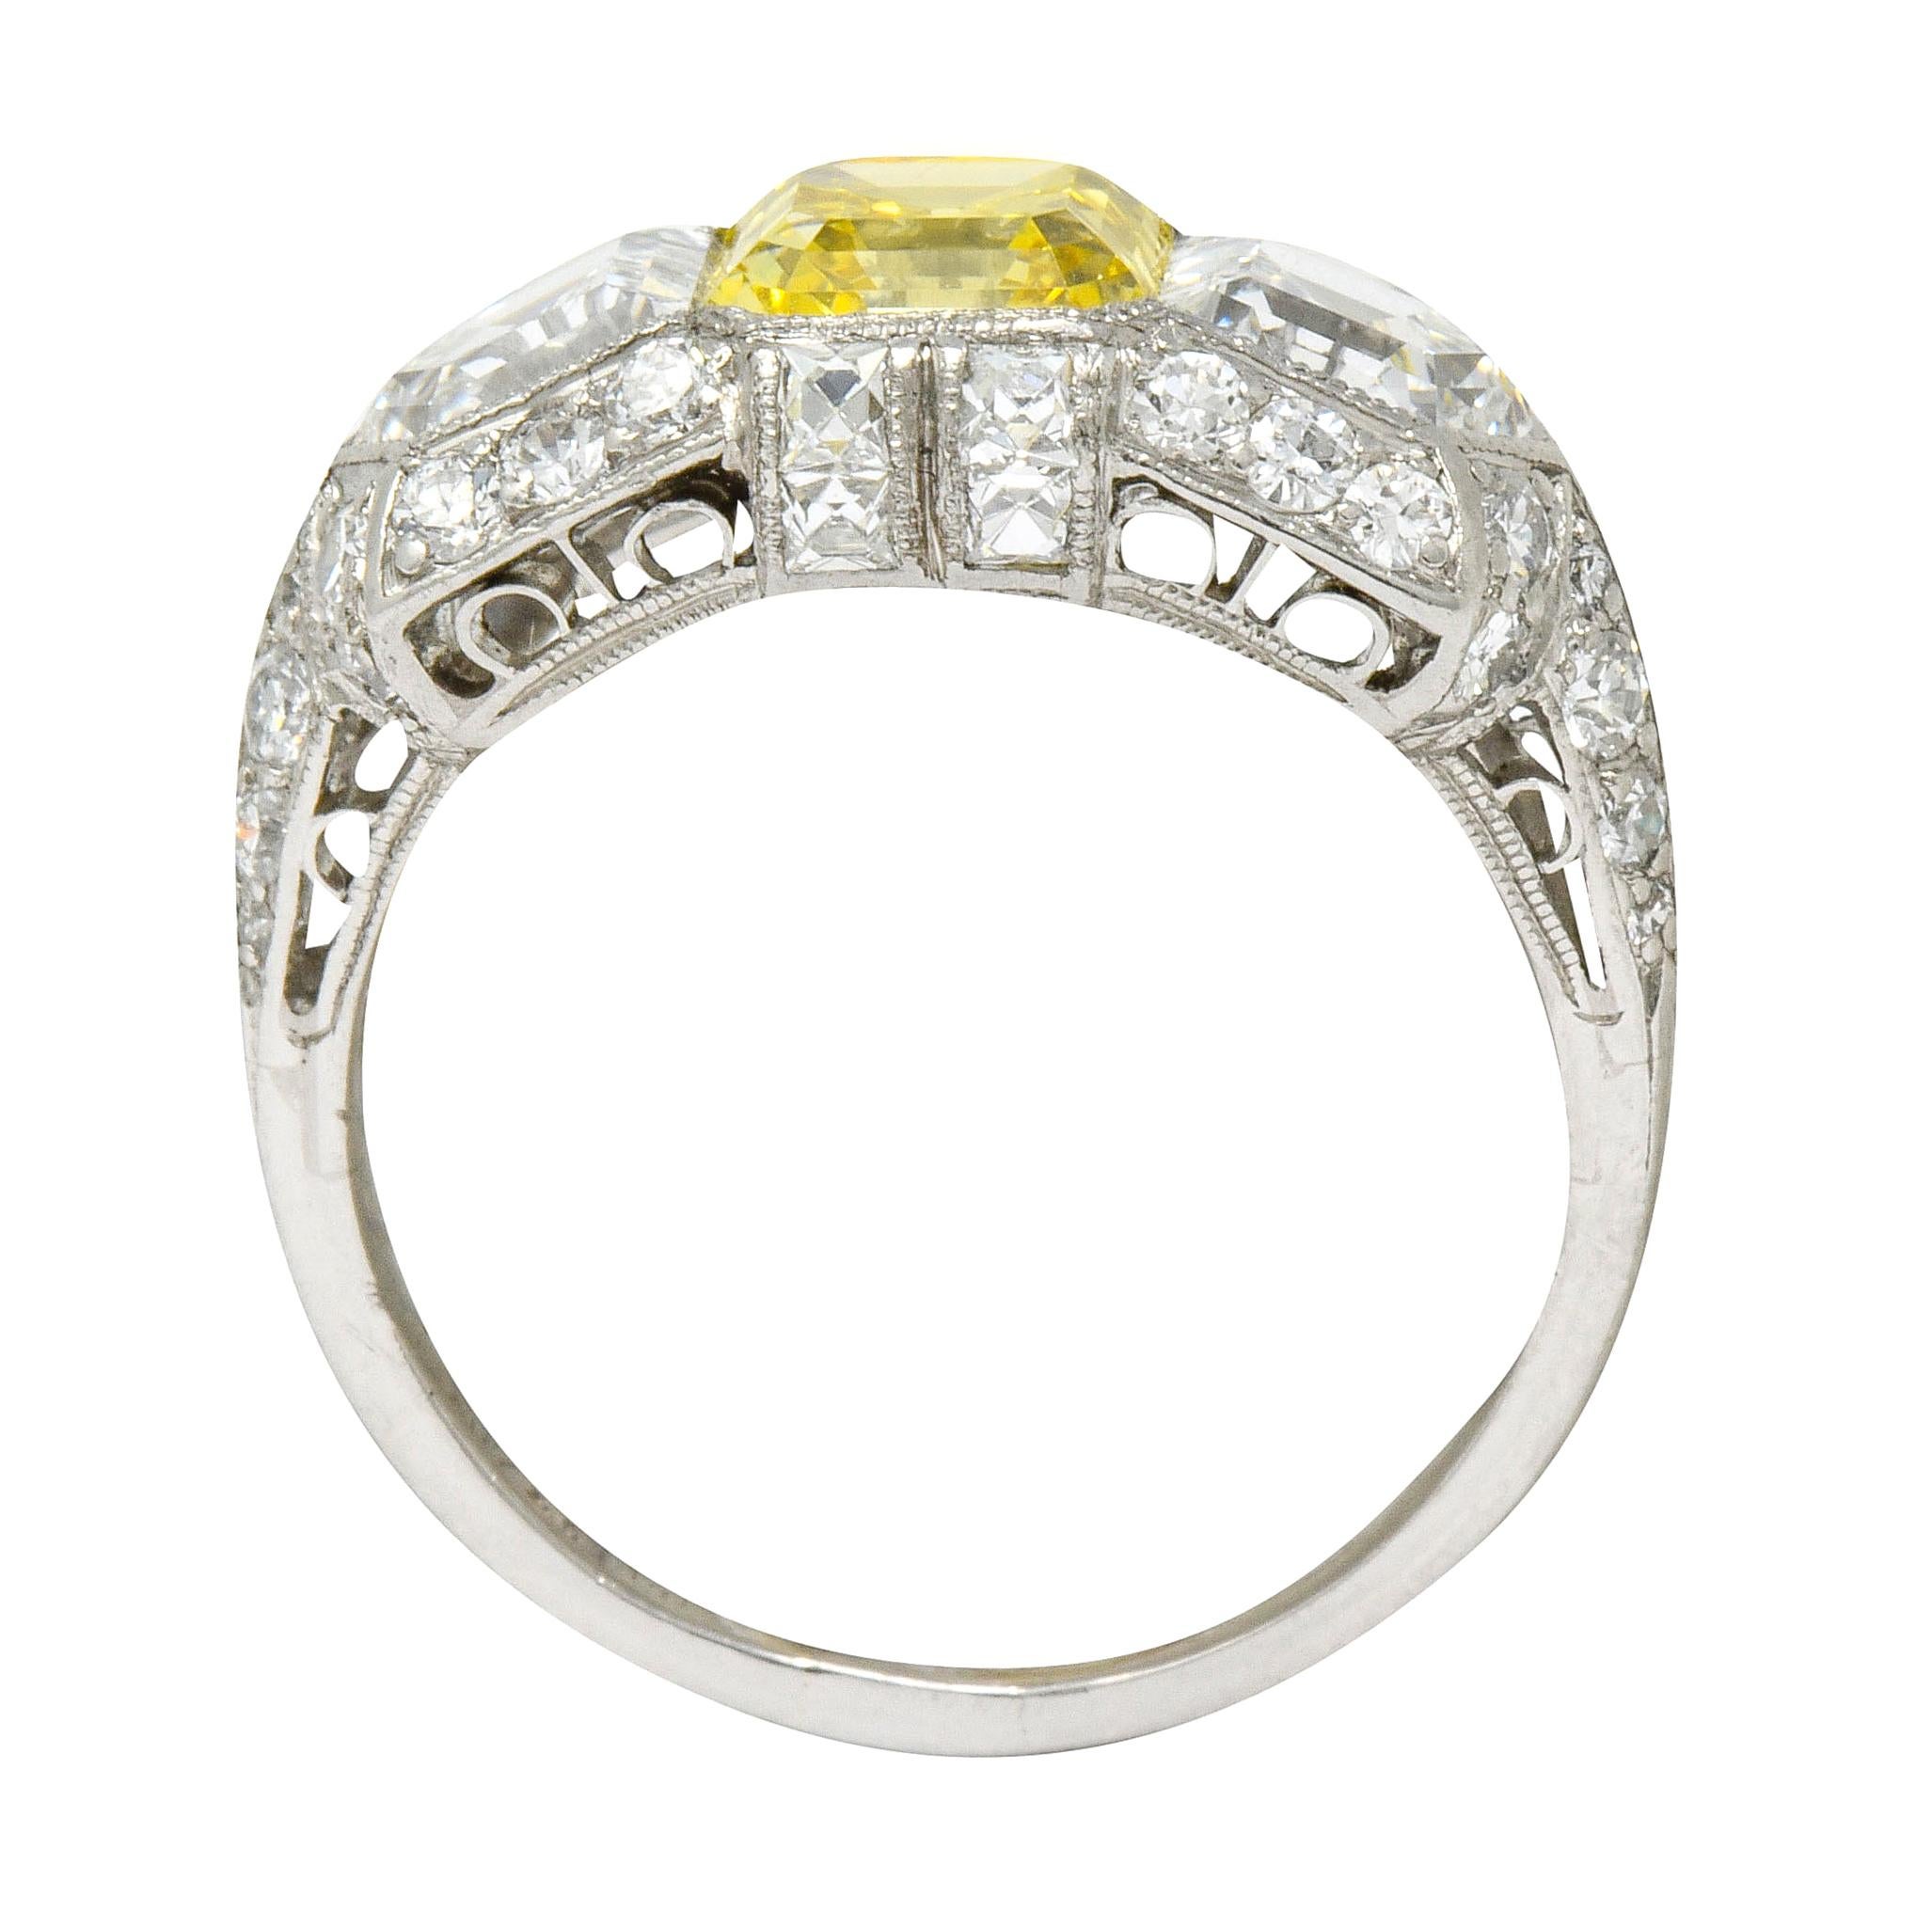 Tiffany & Co. Art Deco Fancy Vivid Yellow Diamond Platinum Cocktail Ring GIA 1